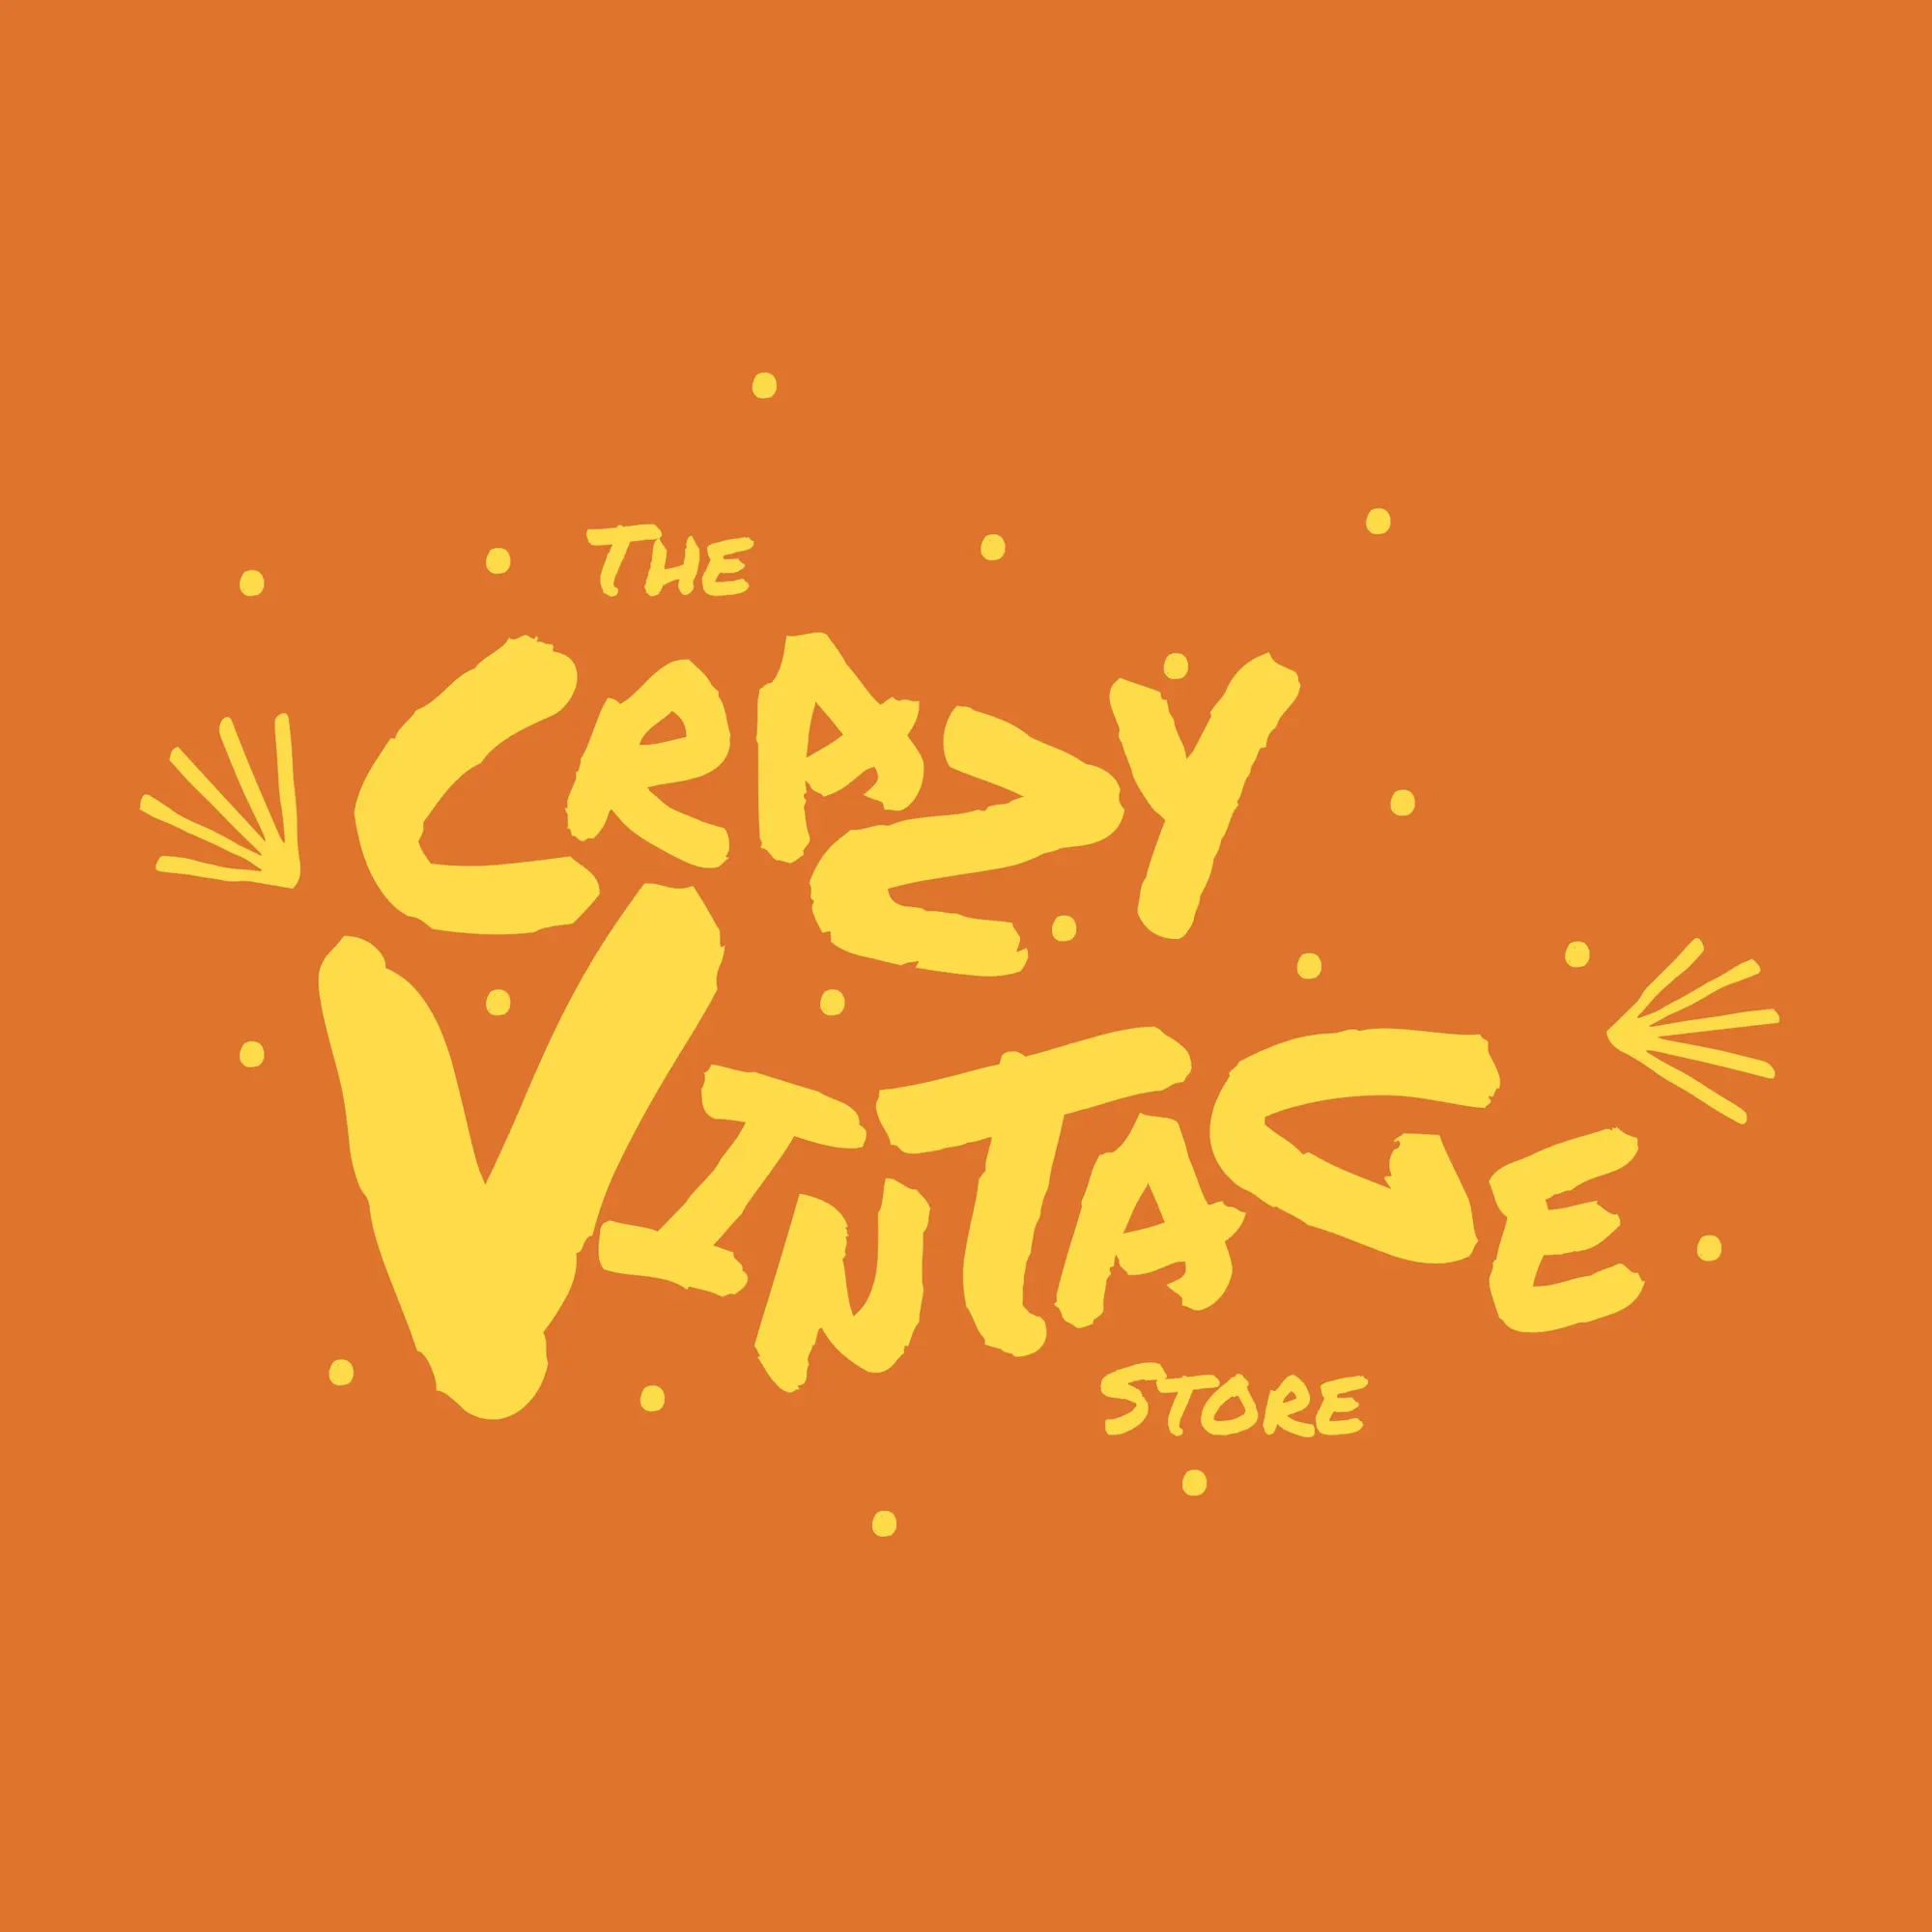 yellow orange crazy vintage clothing store logo square 